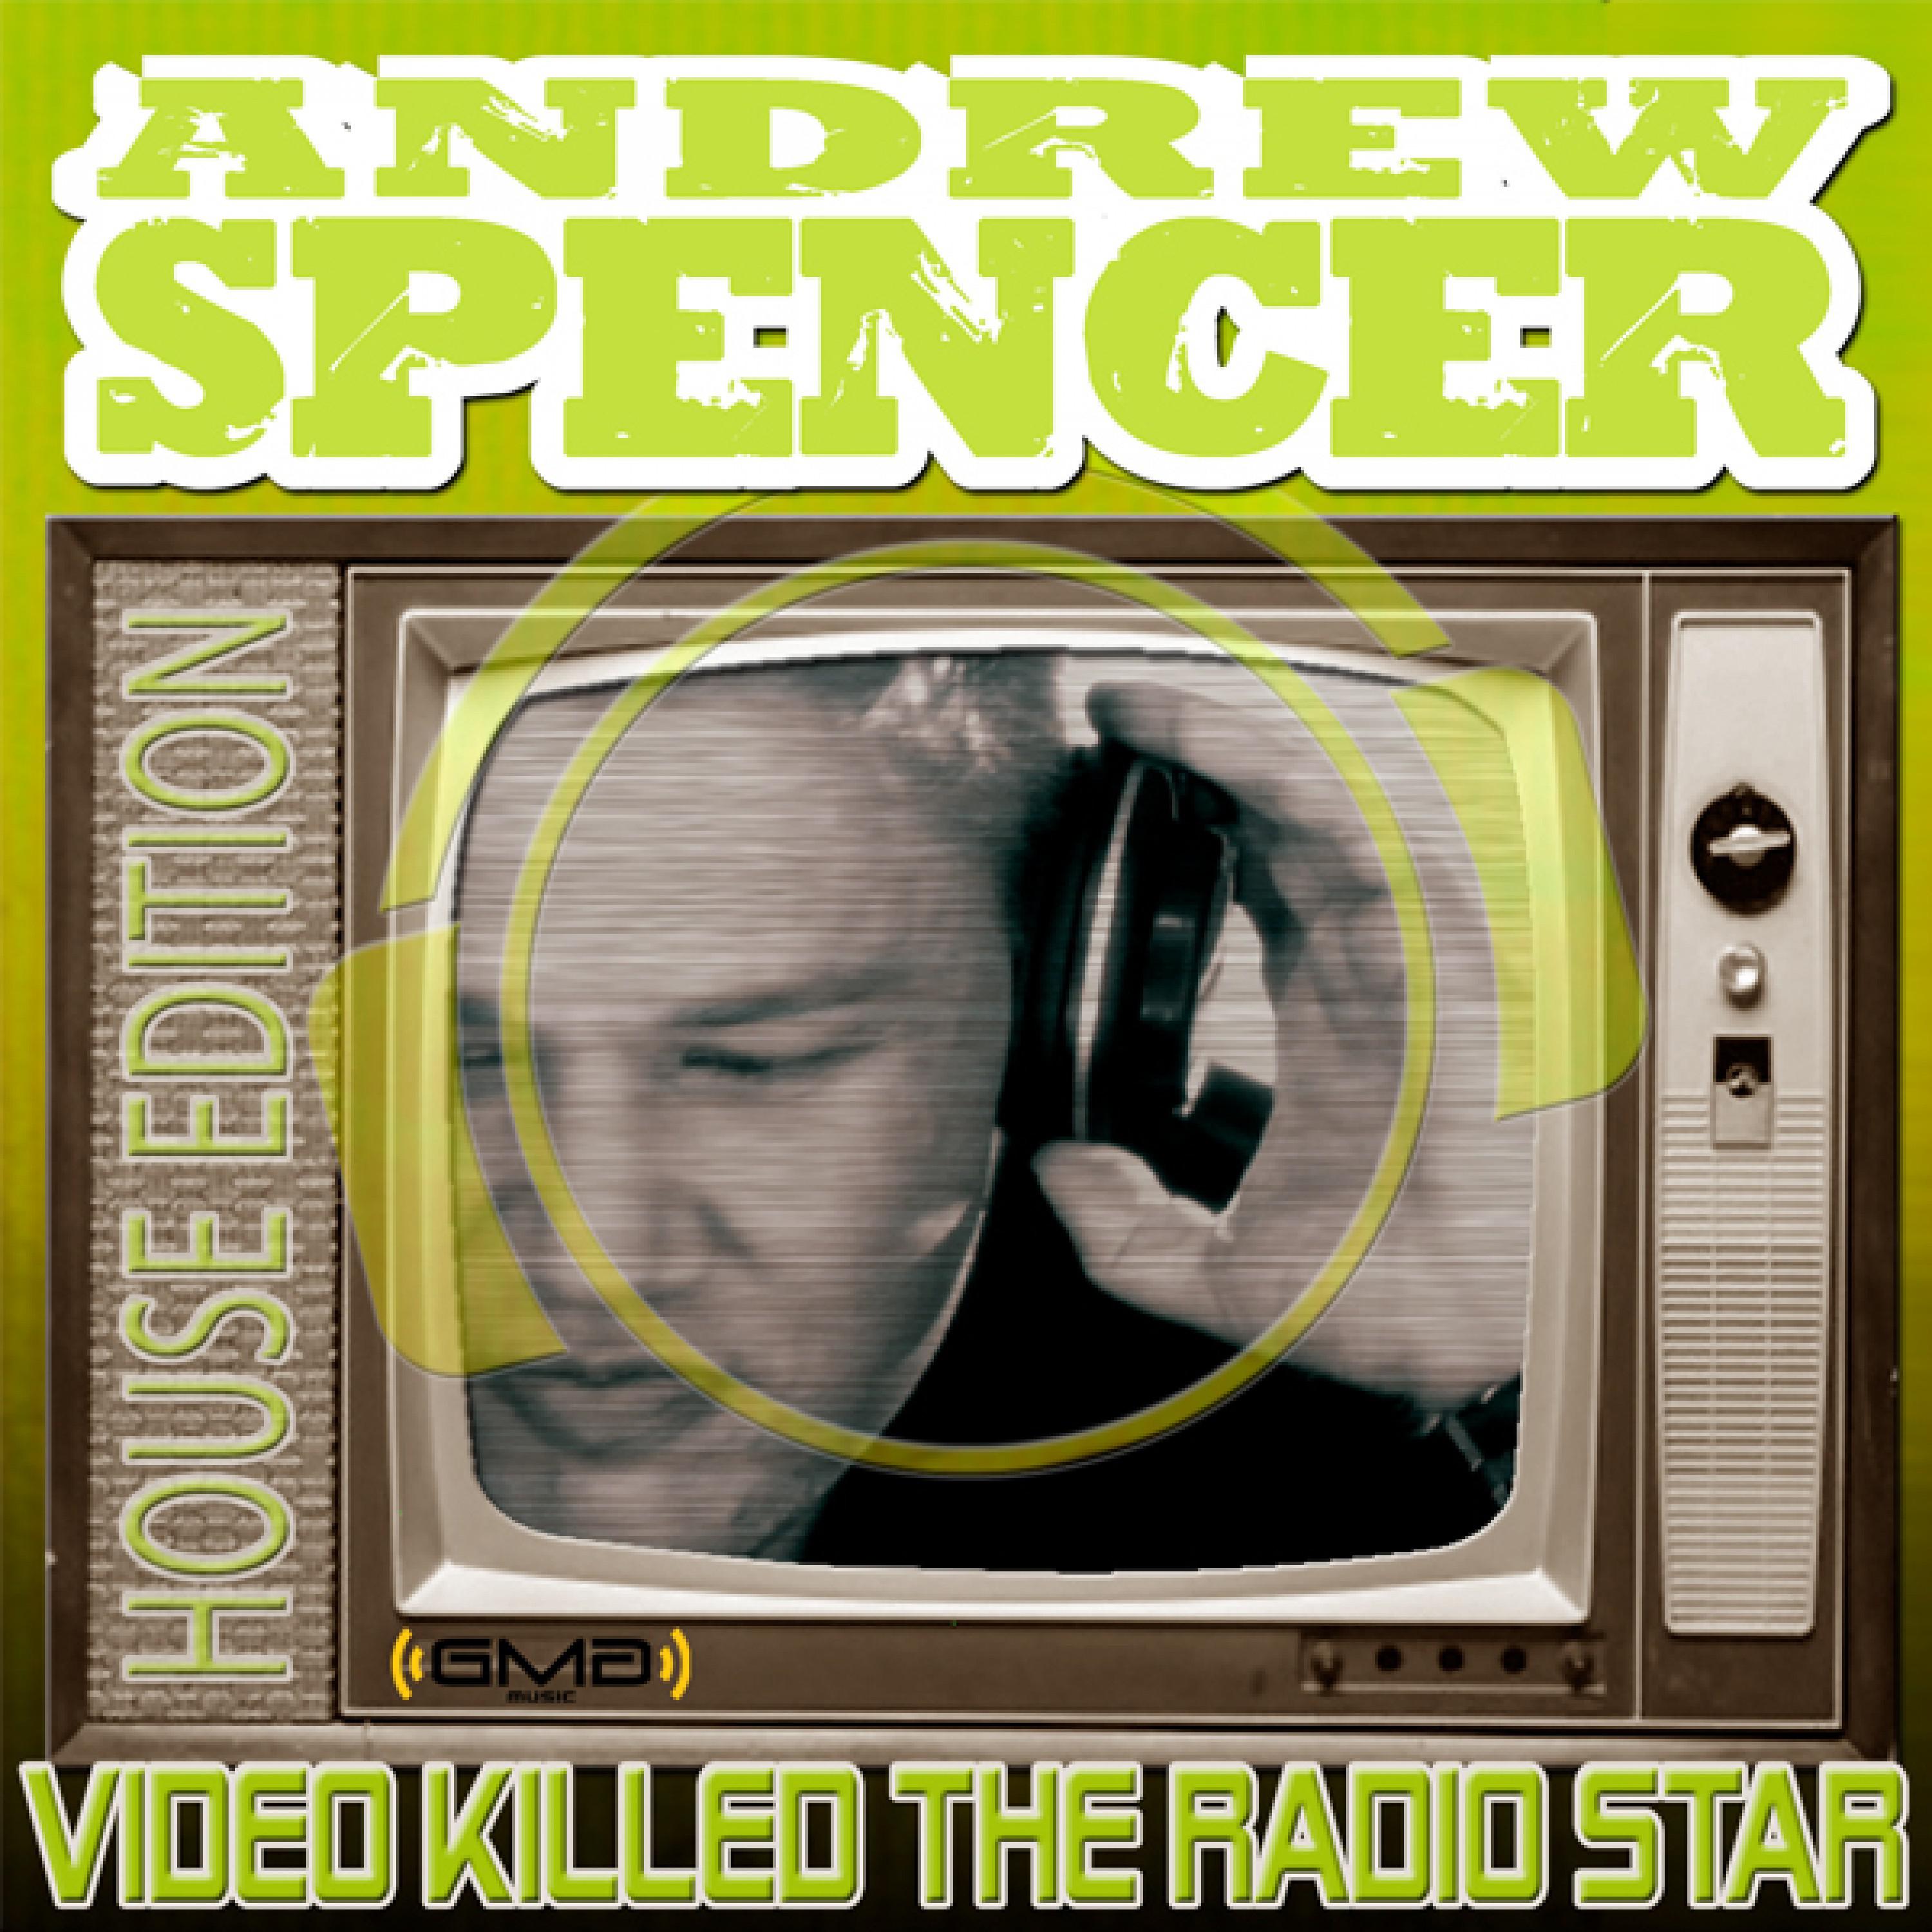 Video Killed The Radio Star (Max Farenthide Remix)